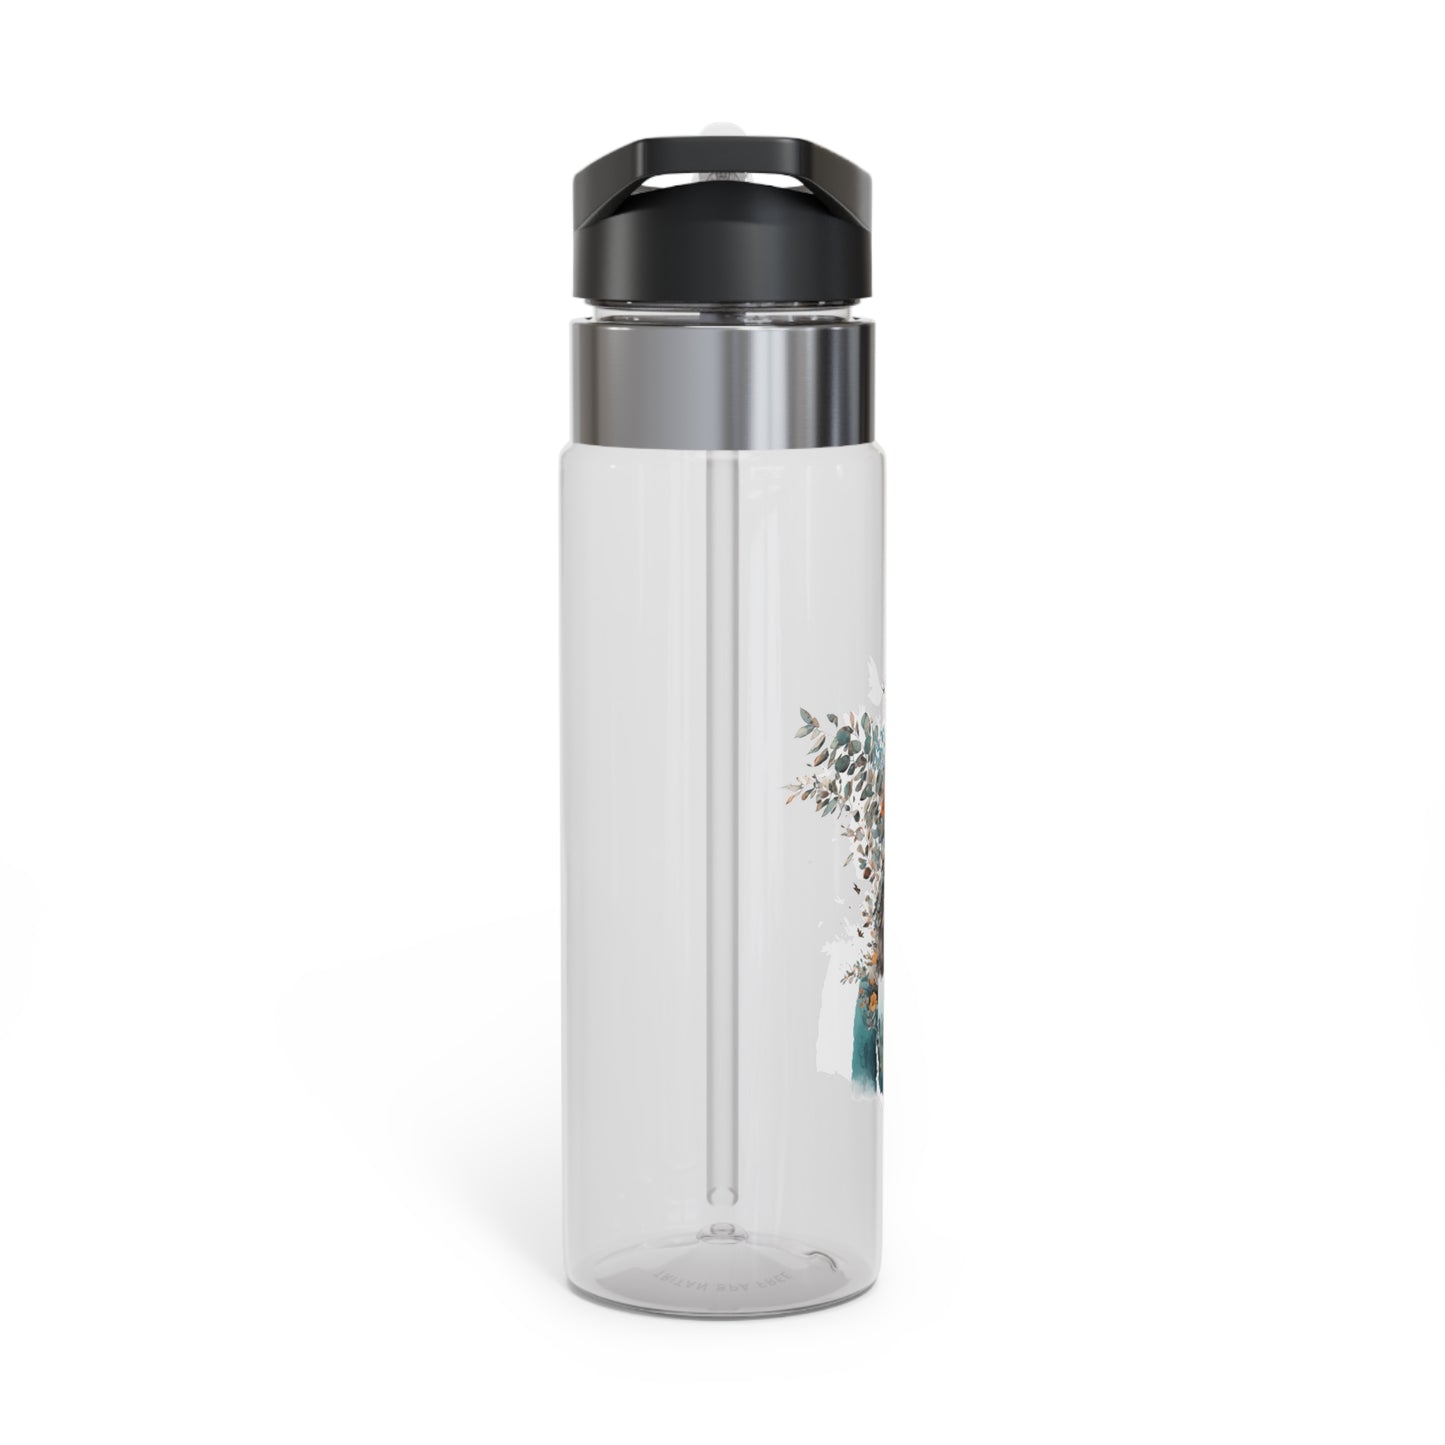 Neduz Designs "Cup of Life" Kensington Tritan™ Sport Bottle, 20oz - Stylish, Durable, and Eco-Friendly